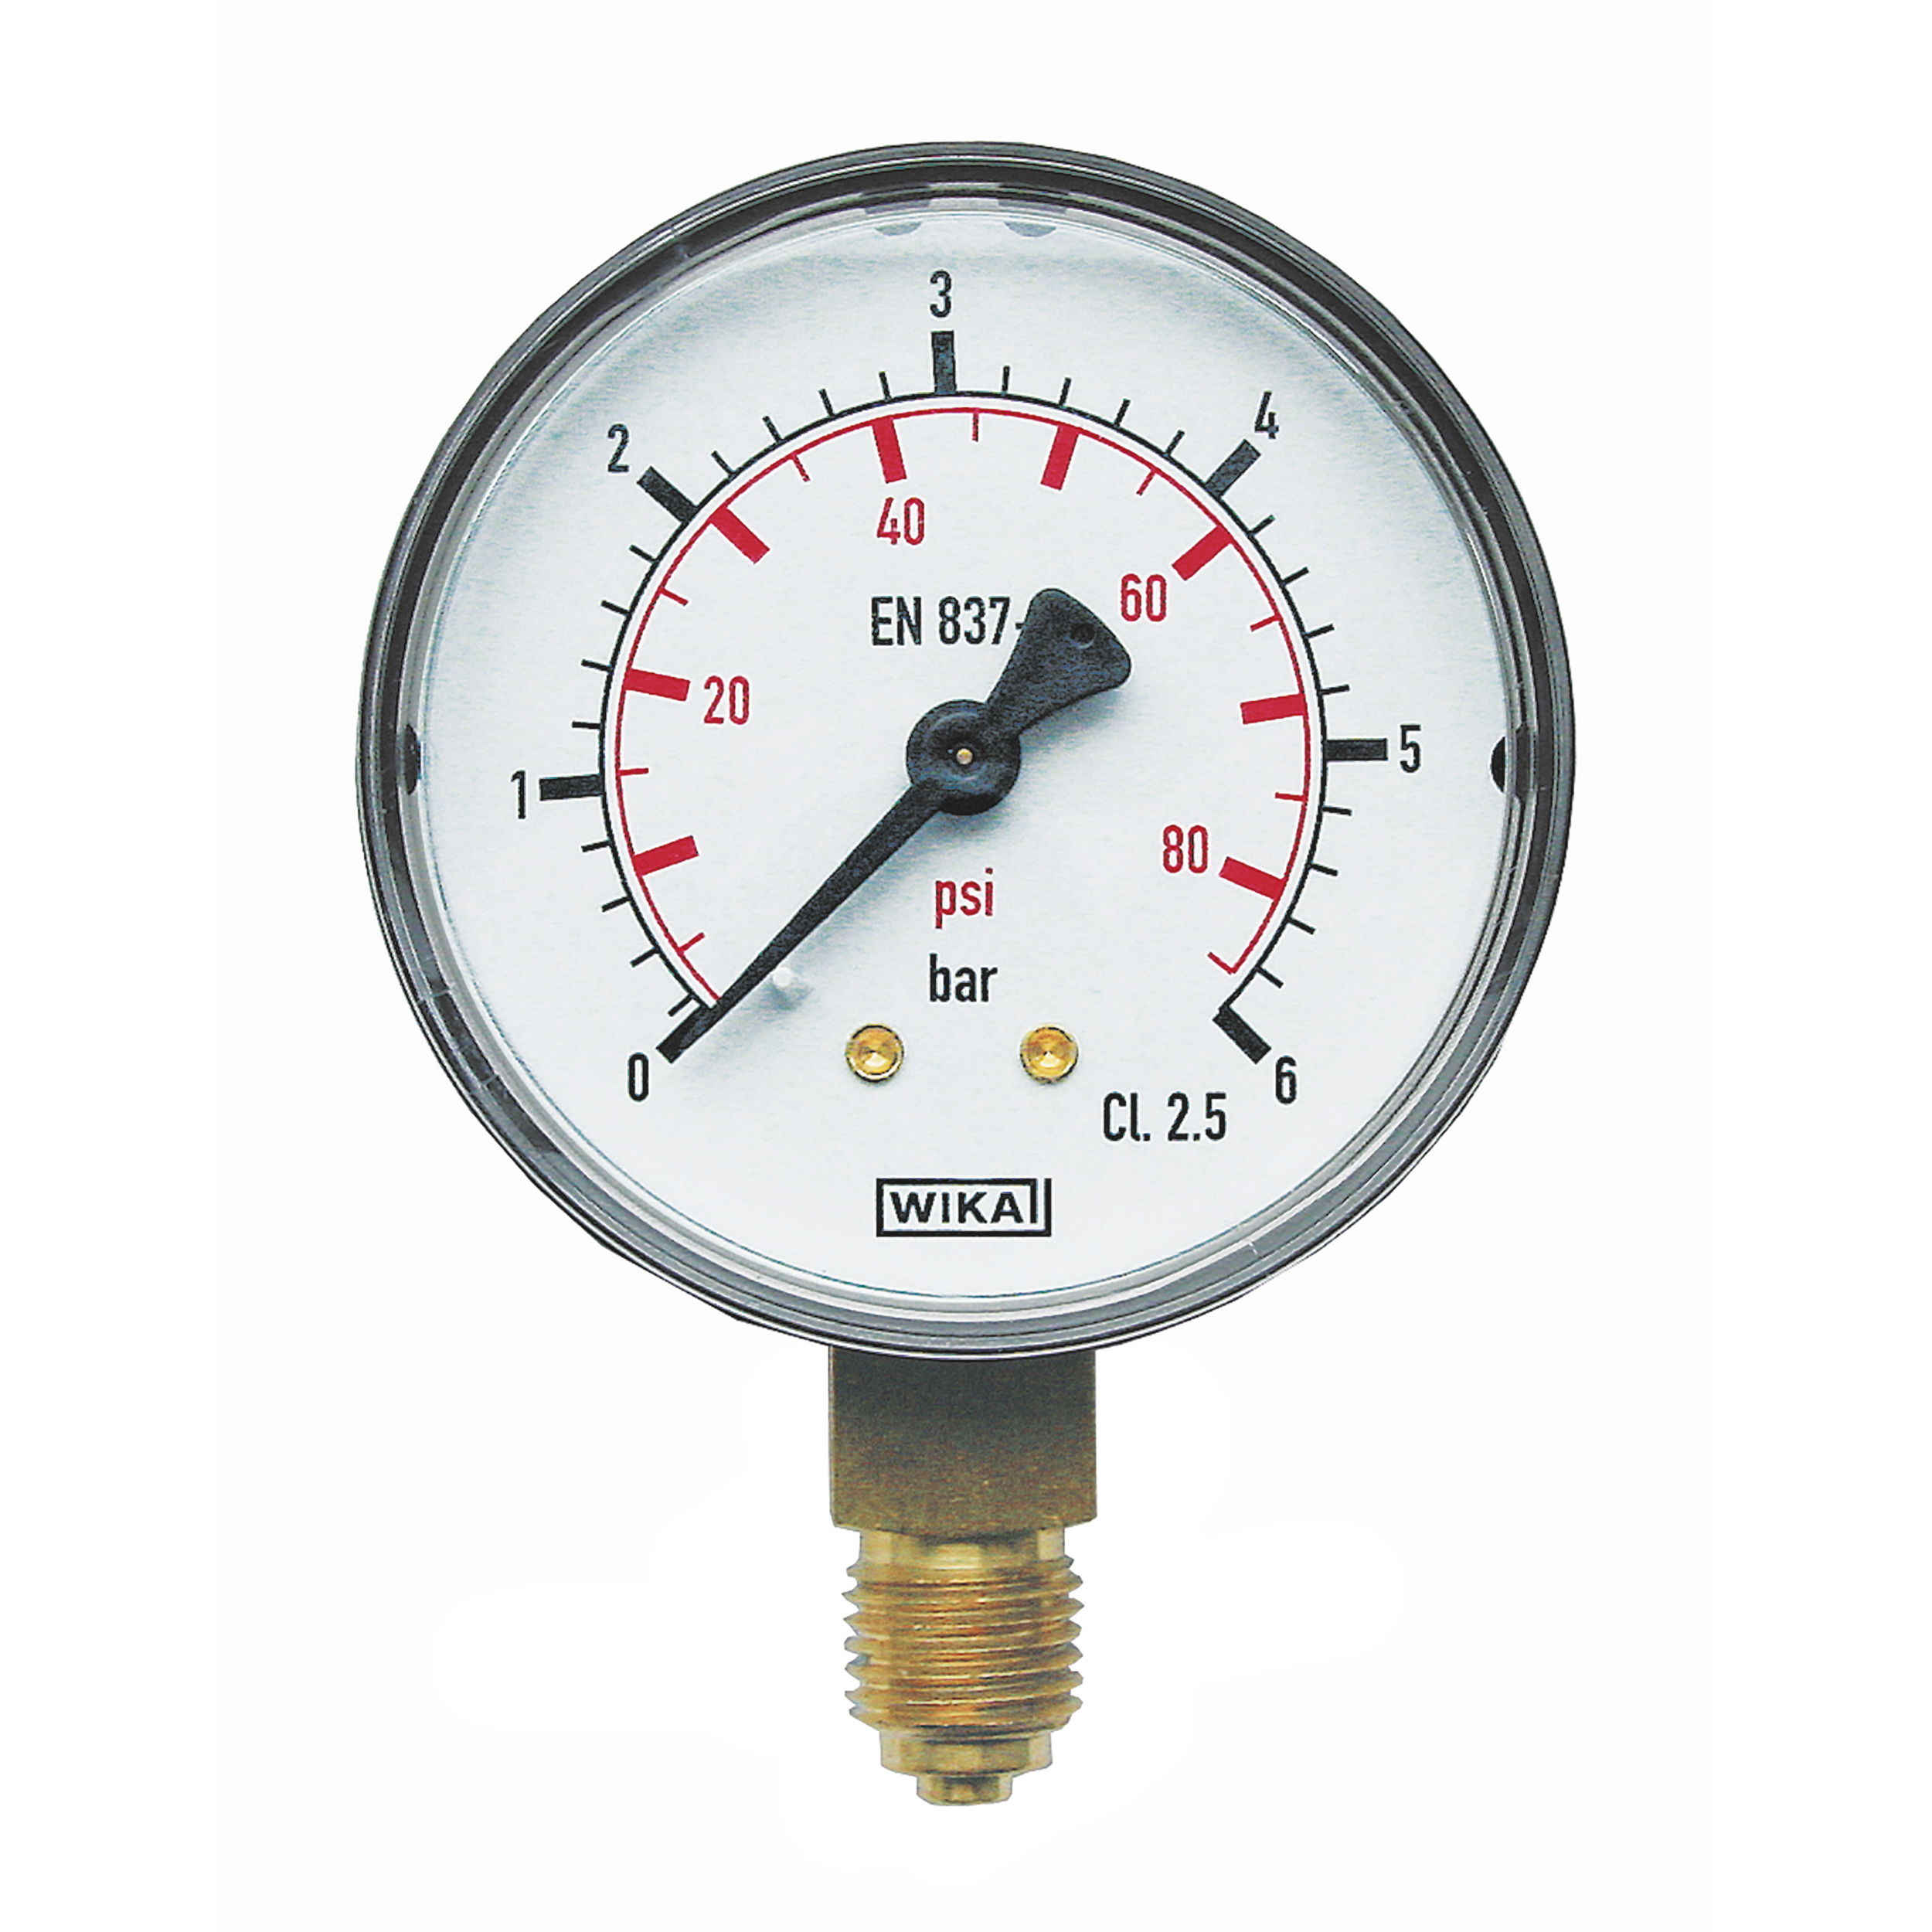 Pressure gauge Ø 63, vertical connection, class 2.5